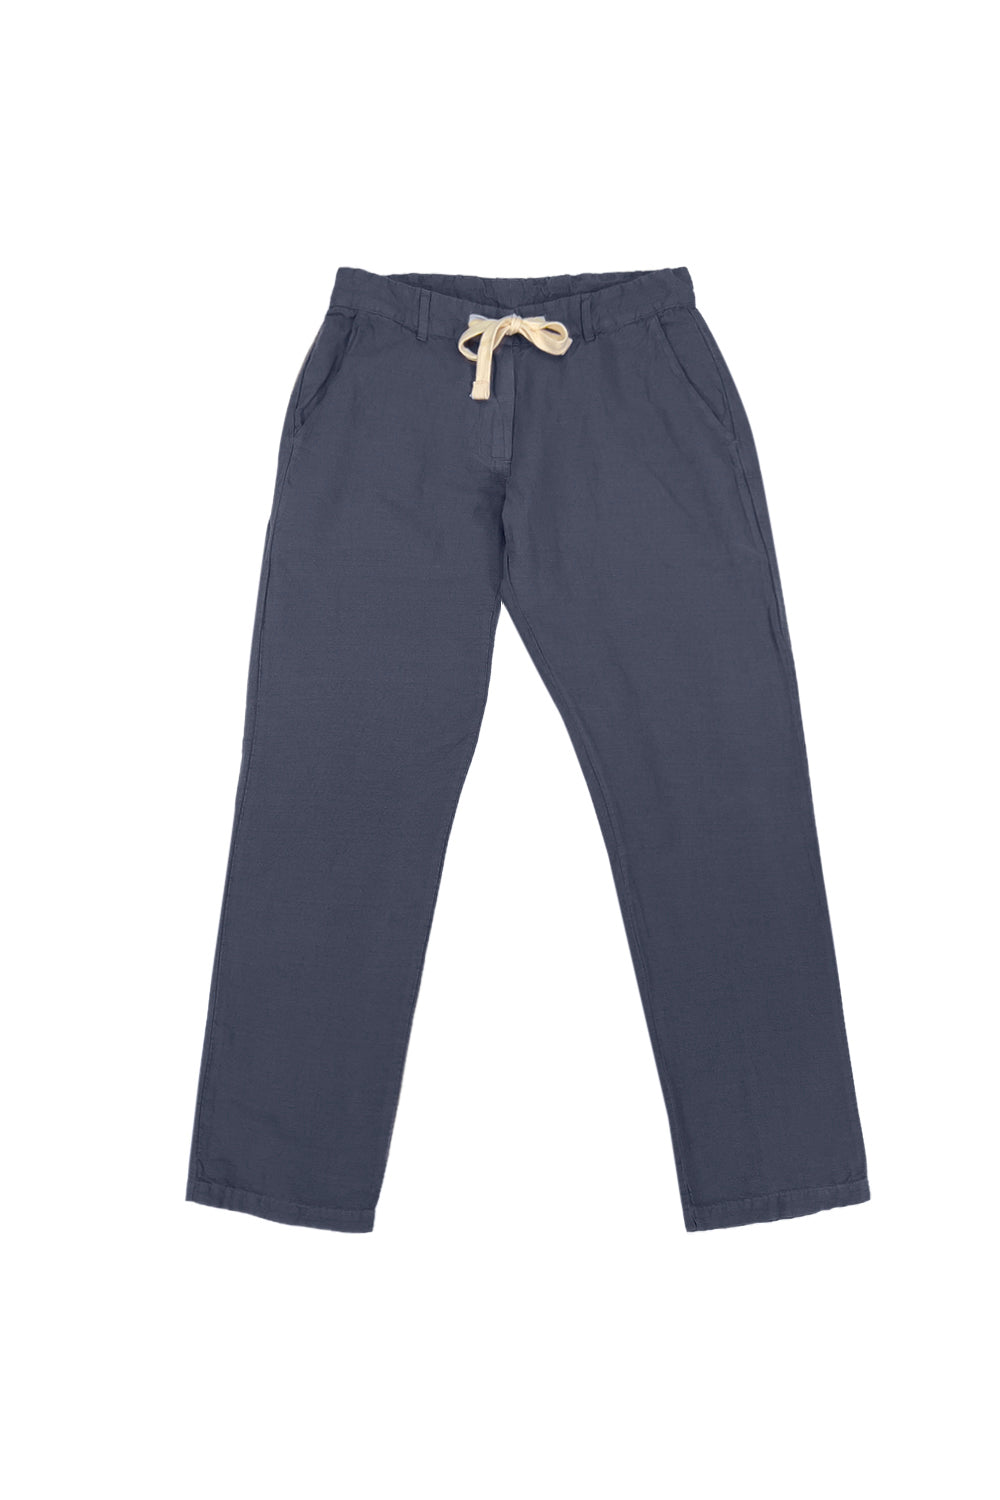 Traverse Pant | Jungmaven Hemp Clothing & Accessories / Color: Diesel Gray